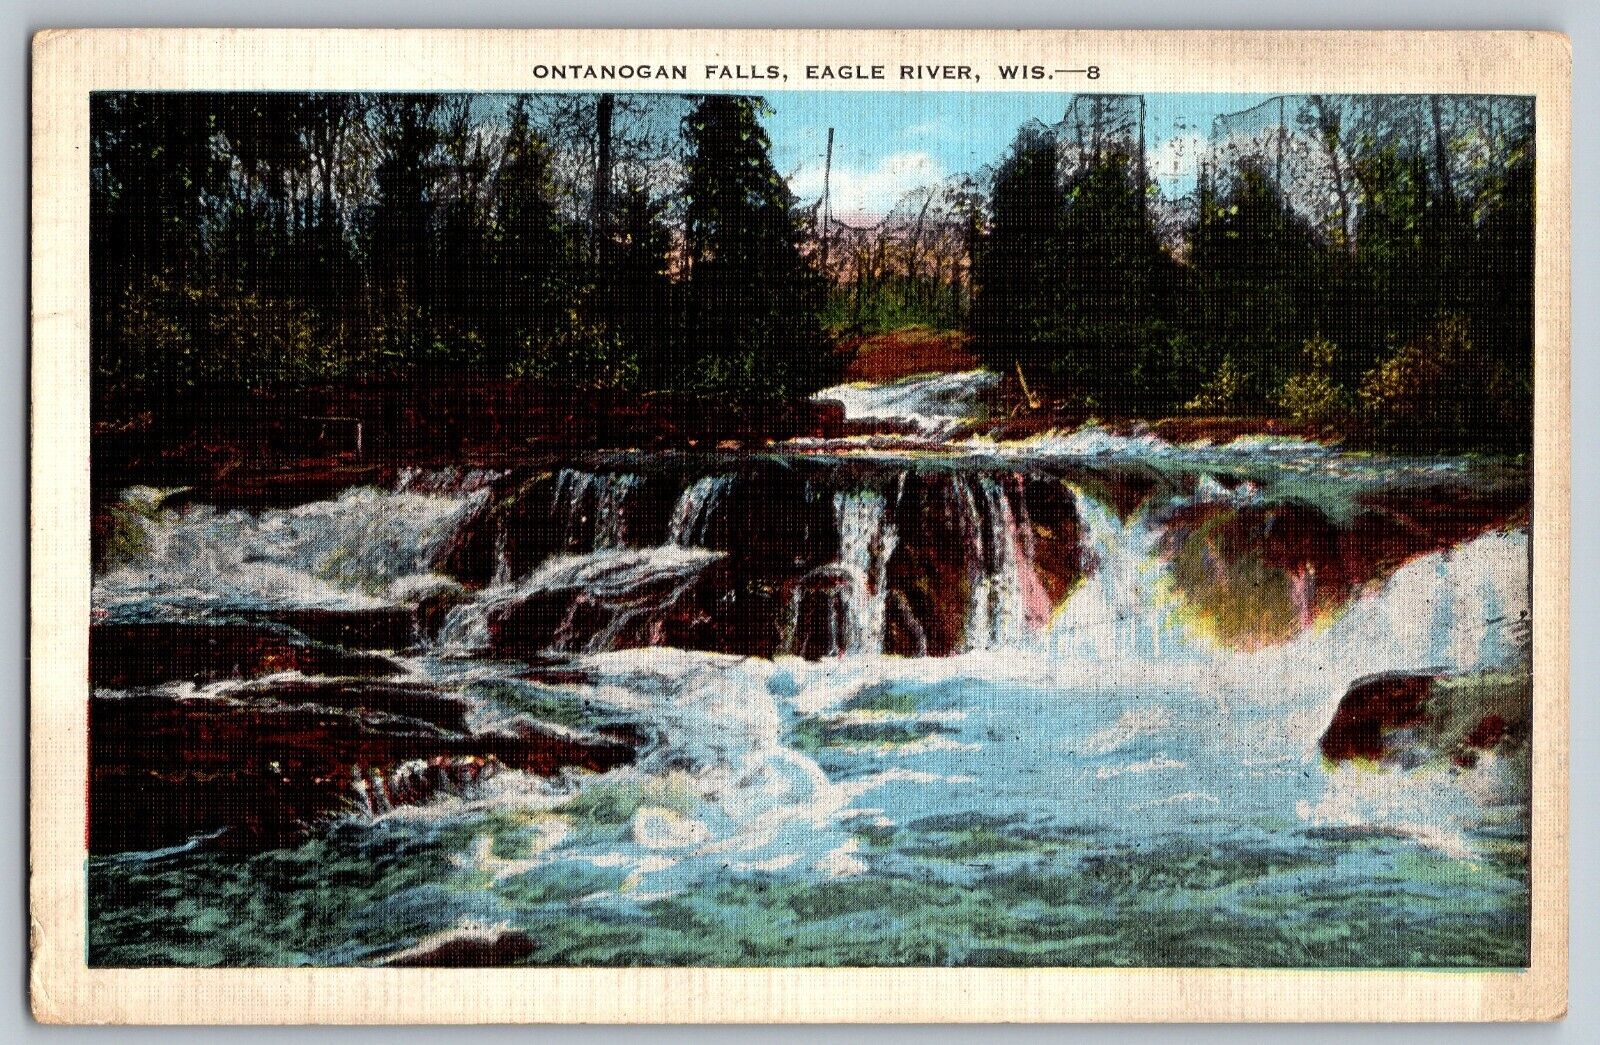 Eagle River, Wisconsin - Scenic View of Ontanogan Falls - Vintage Postcard